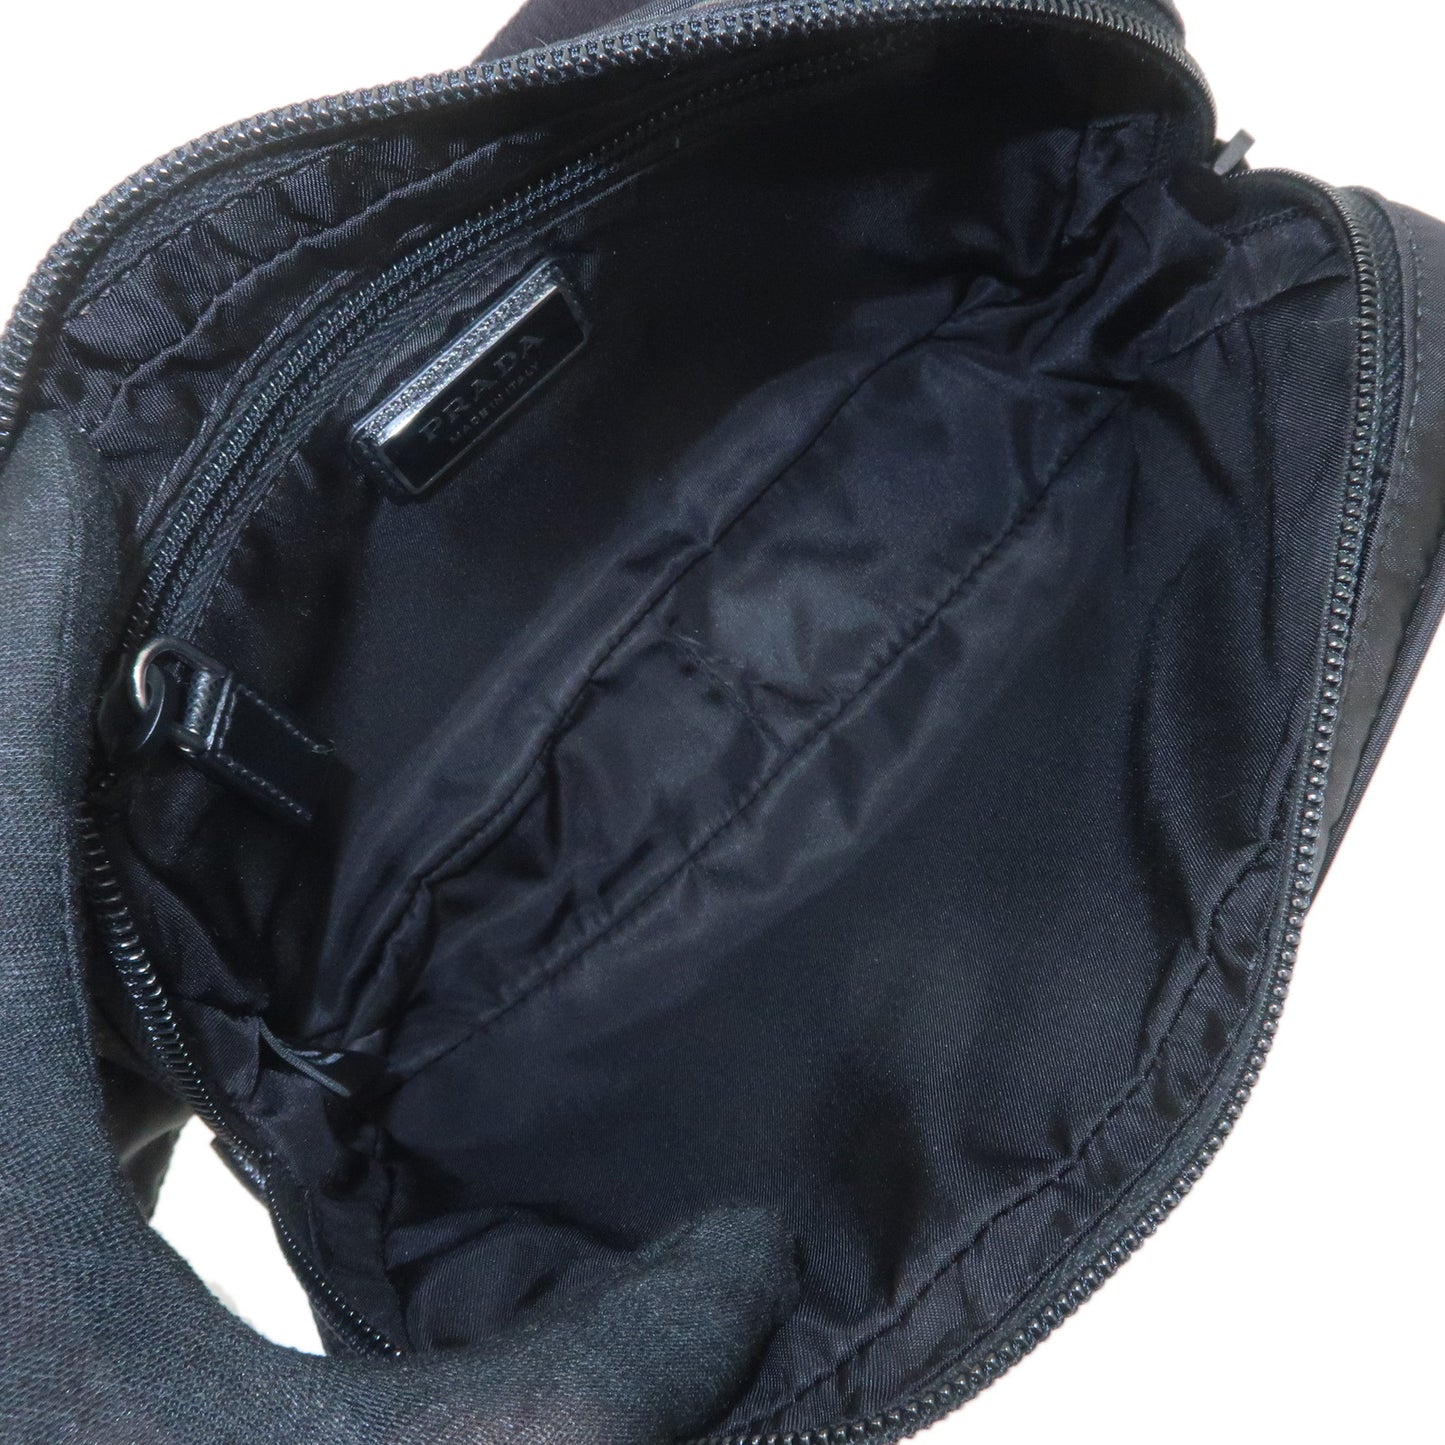 PRADA Logo Nylon Waist Bag Body Bag Fanny Pack Black 2VL977